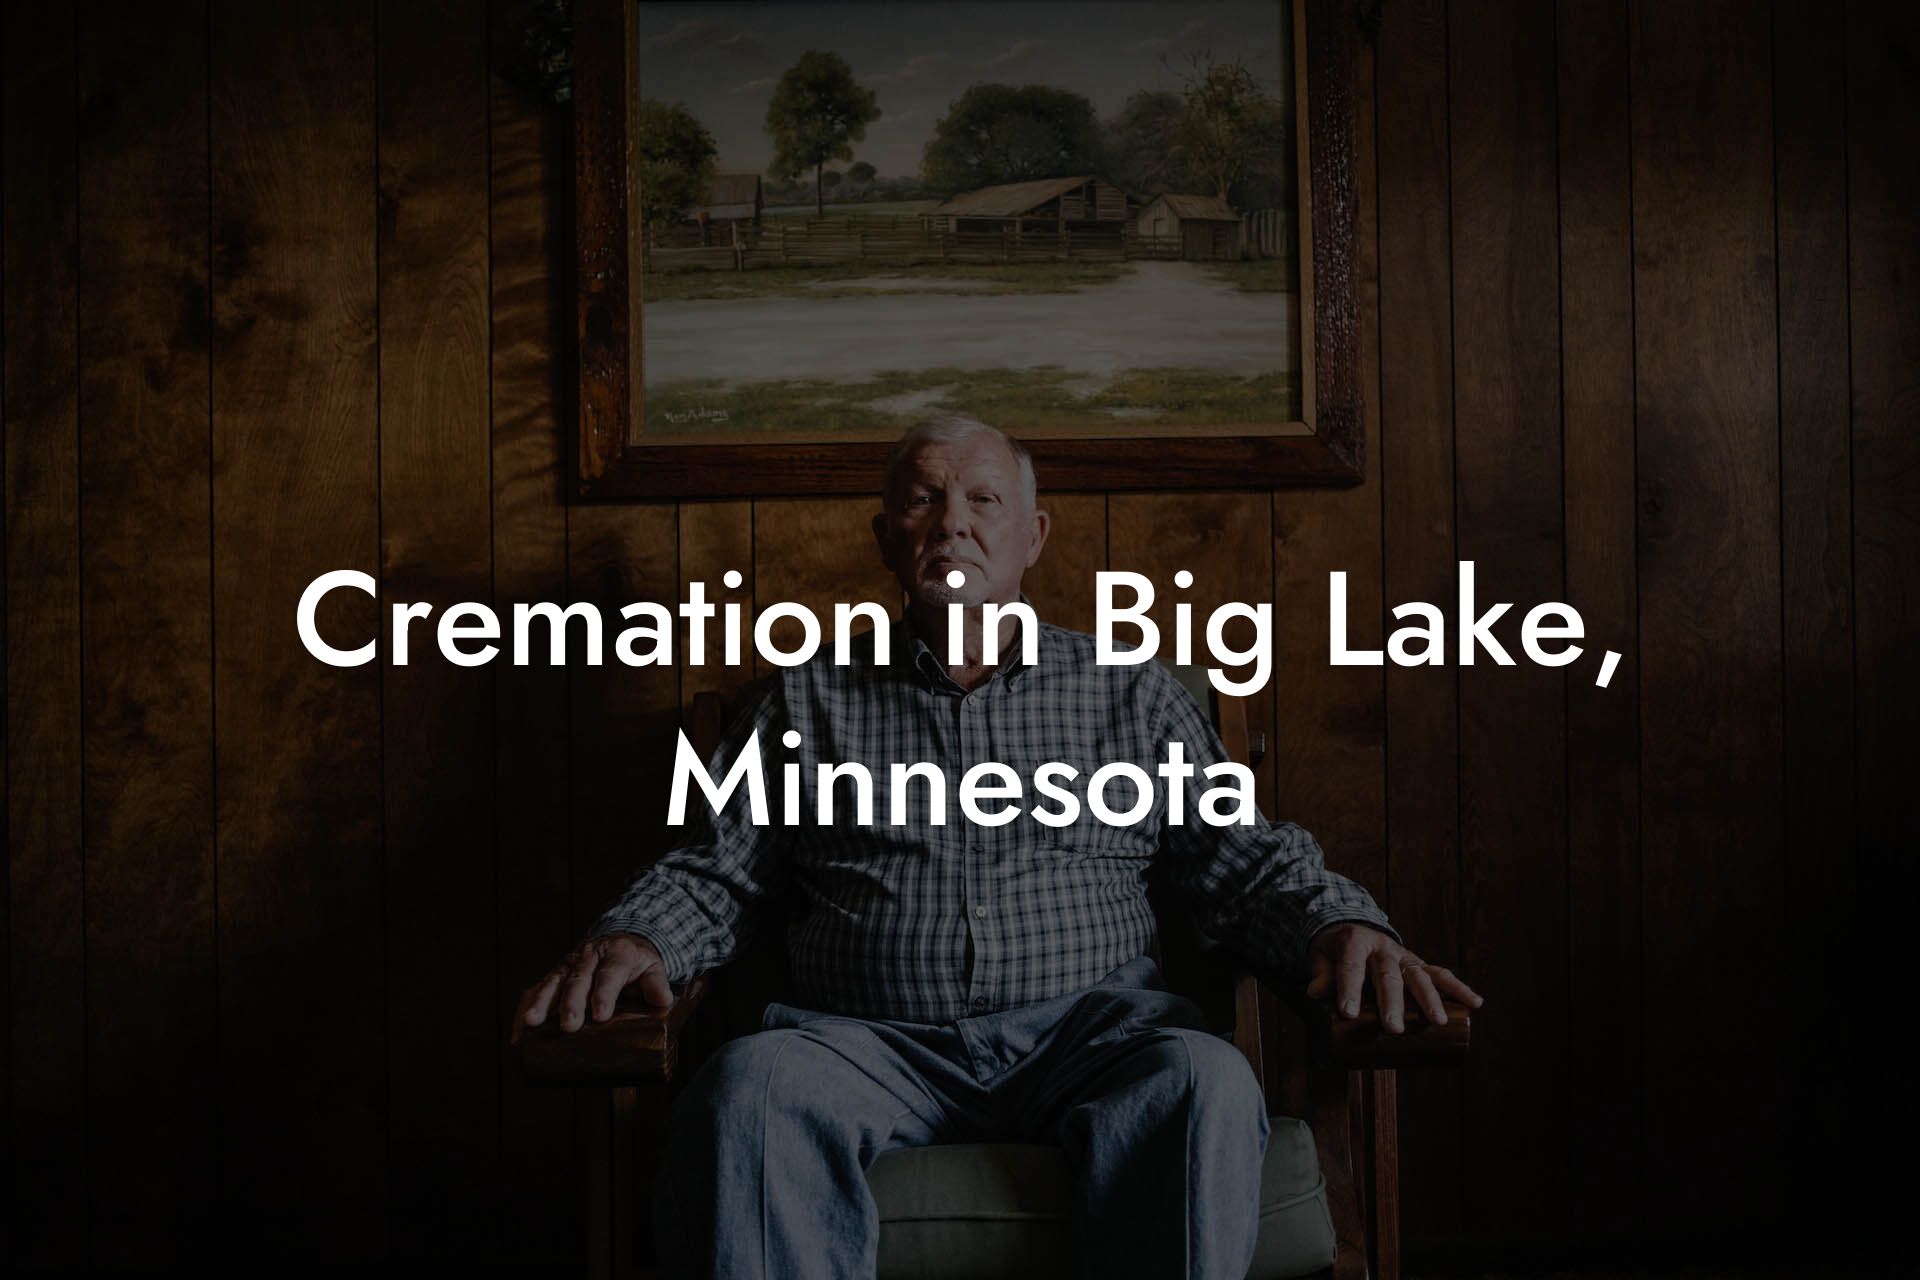 Cremation in Big Lake, Minnesota